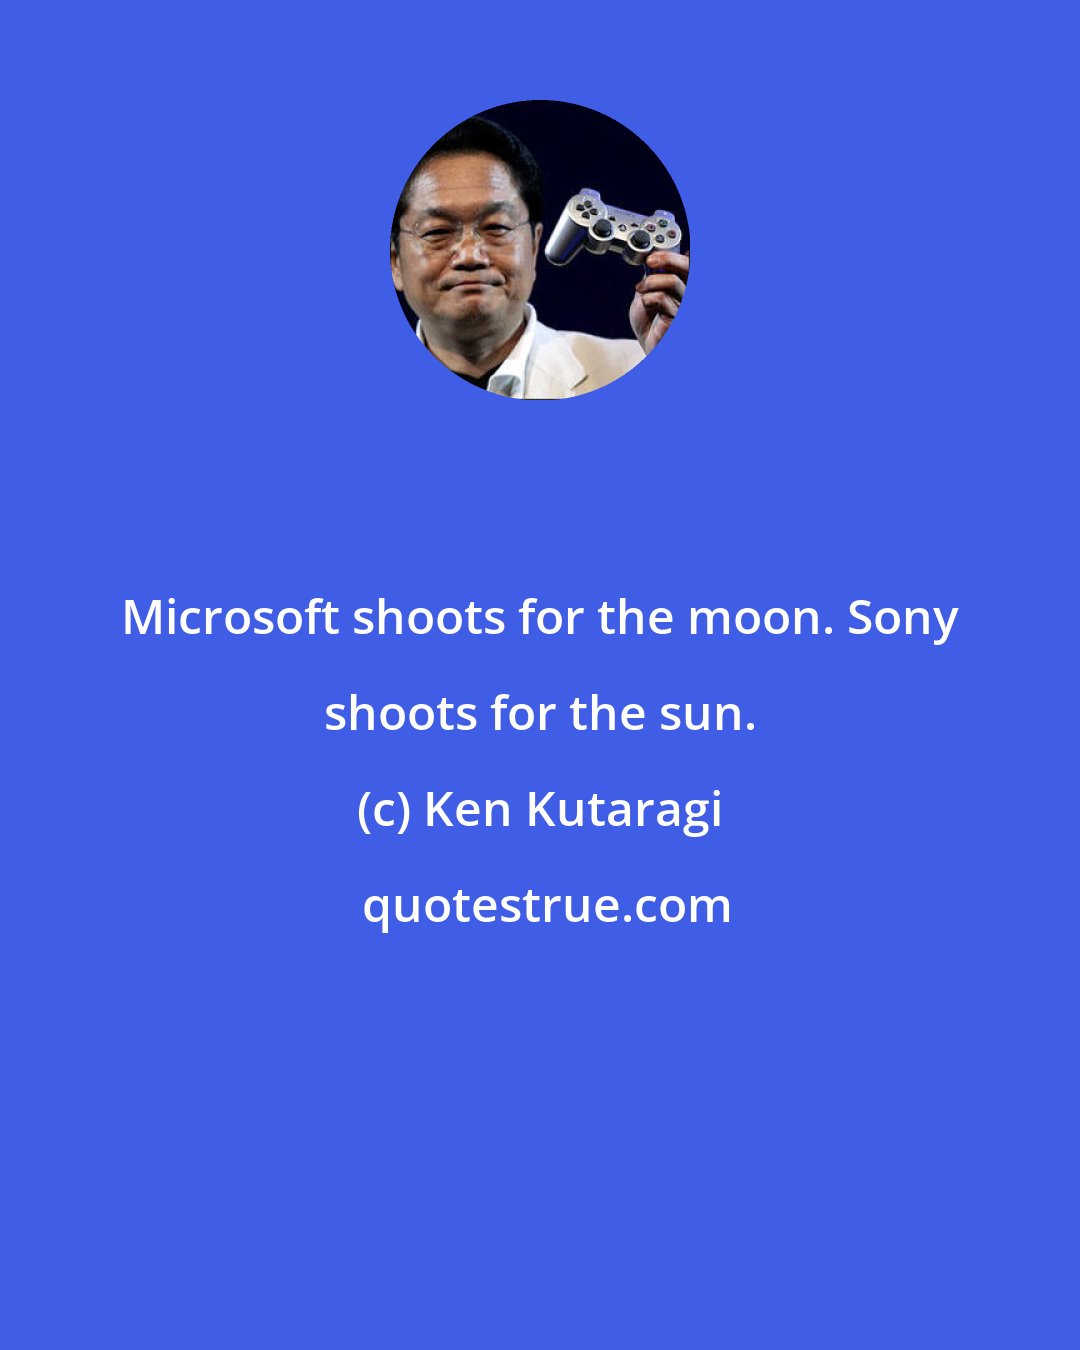 Ken Kutaragi: Microsoft shoots for the moon. Sony shoots for the sun.